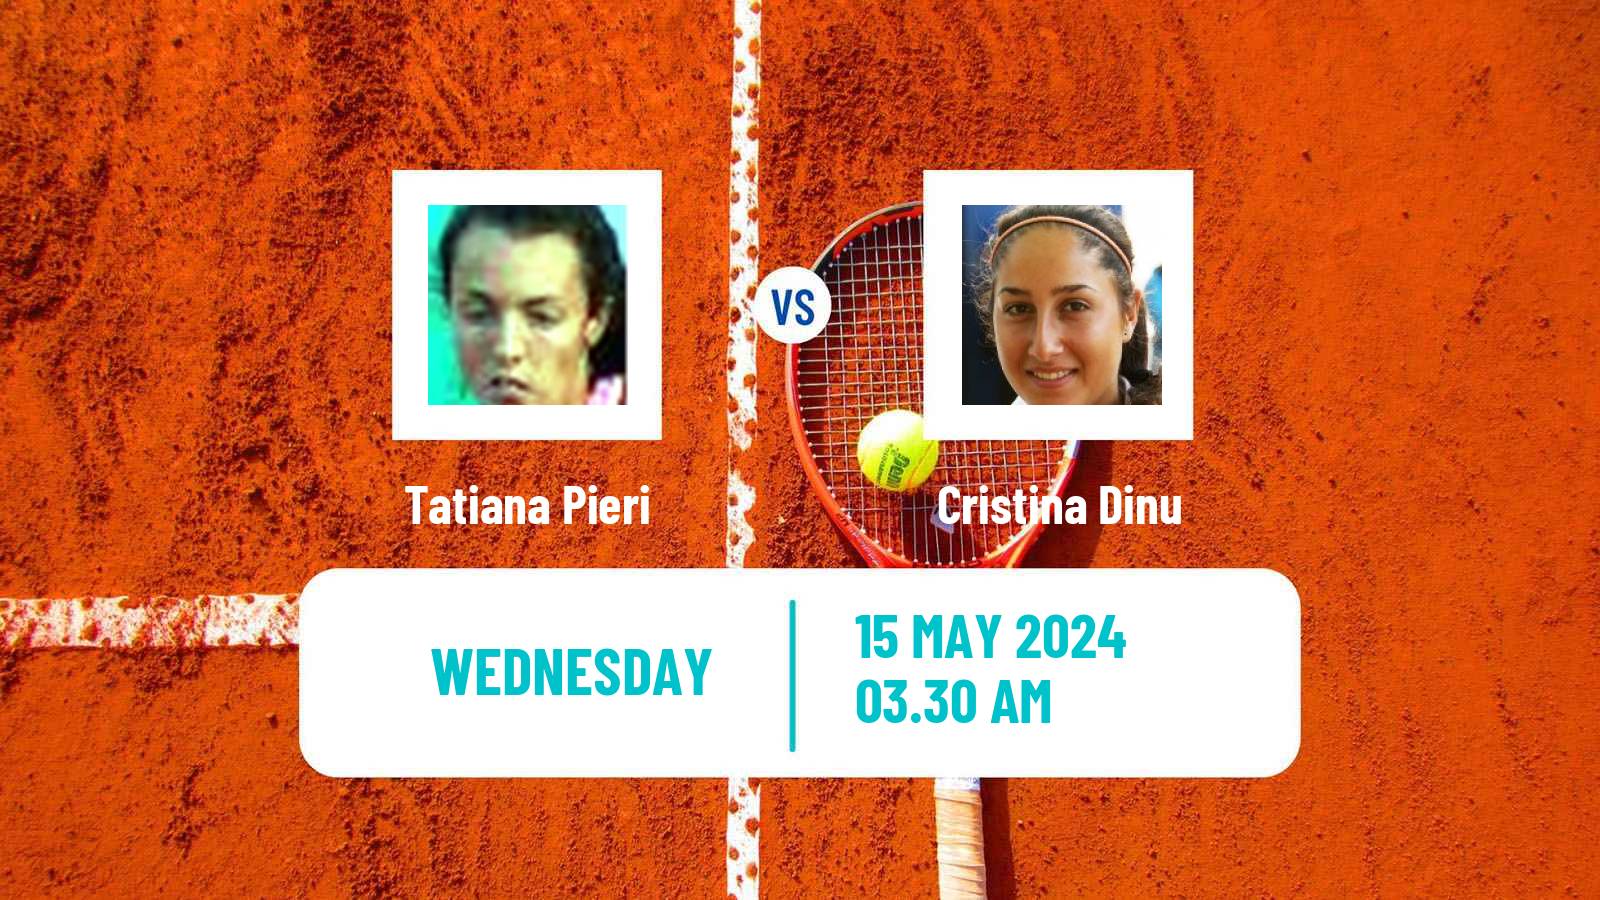 Tennis ITF W35 Villach Women Tatiana Pieri - Cristina Dinu